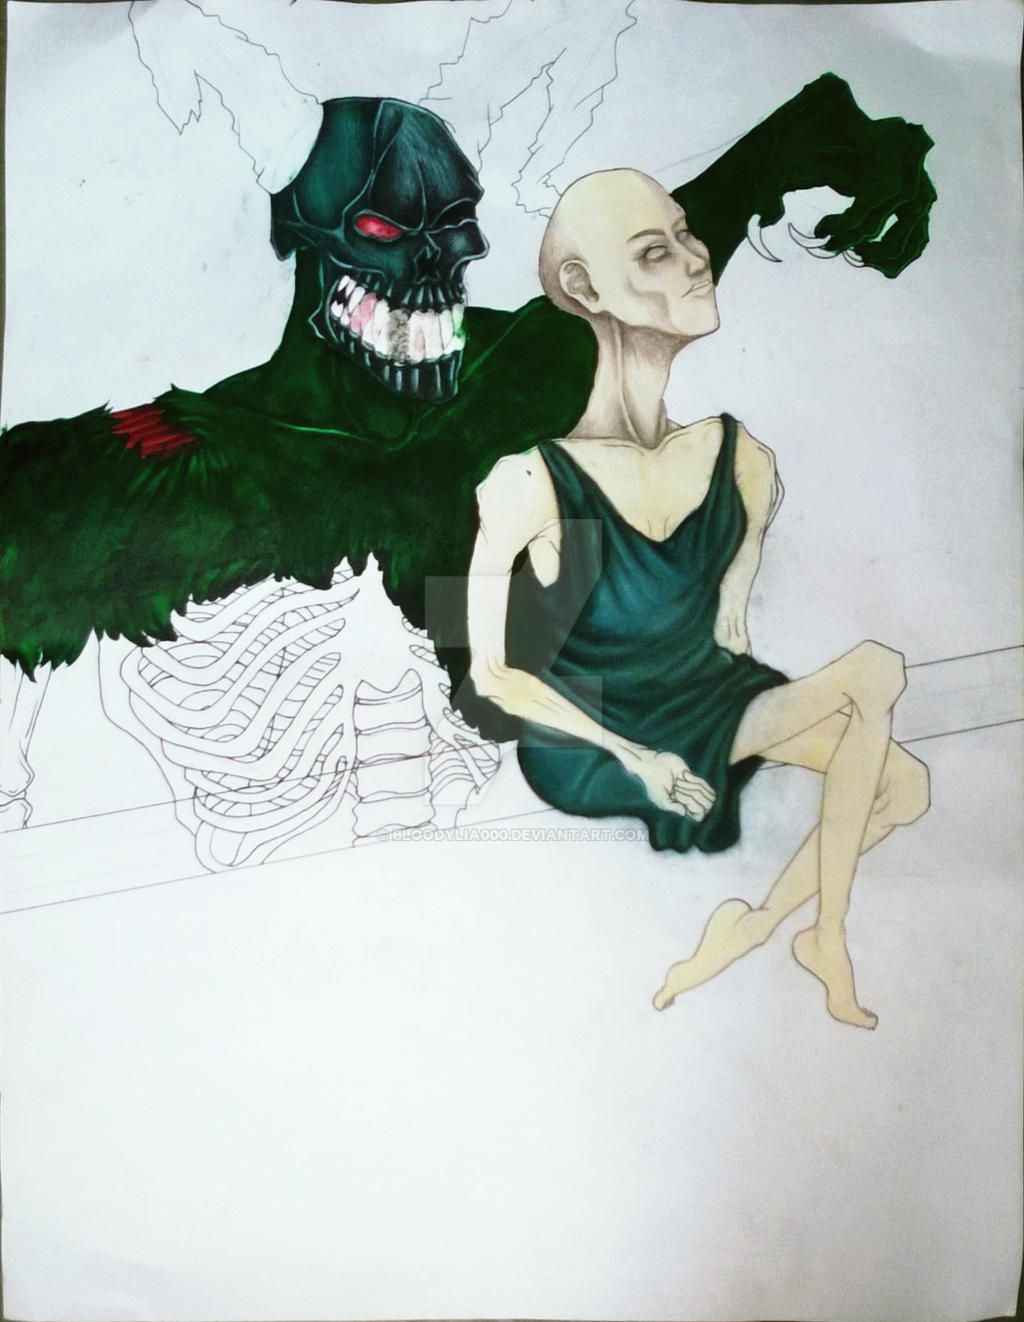 sketch against drug addiction ((final poster)) by bloodylia000 on DeviantArt